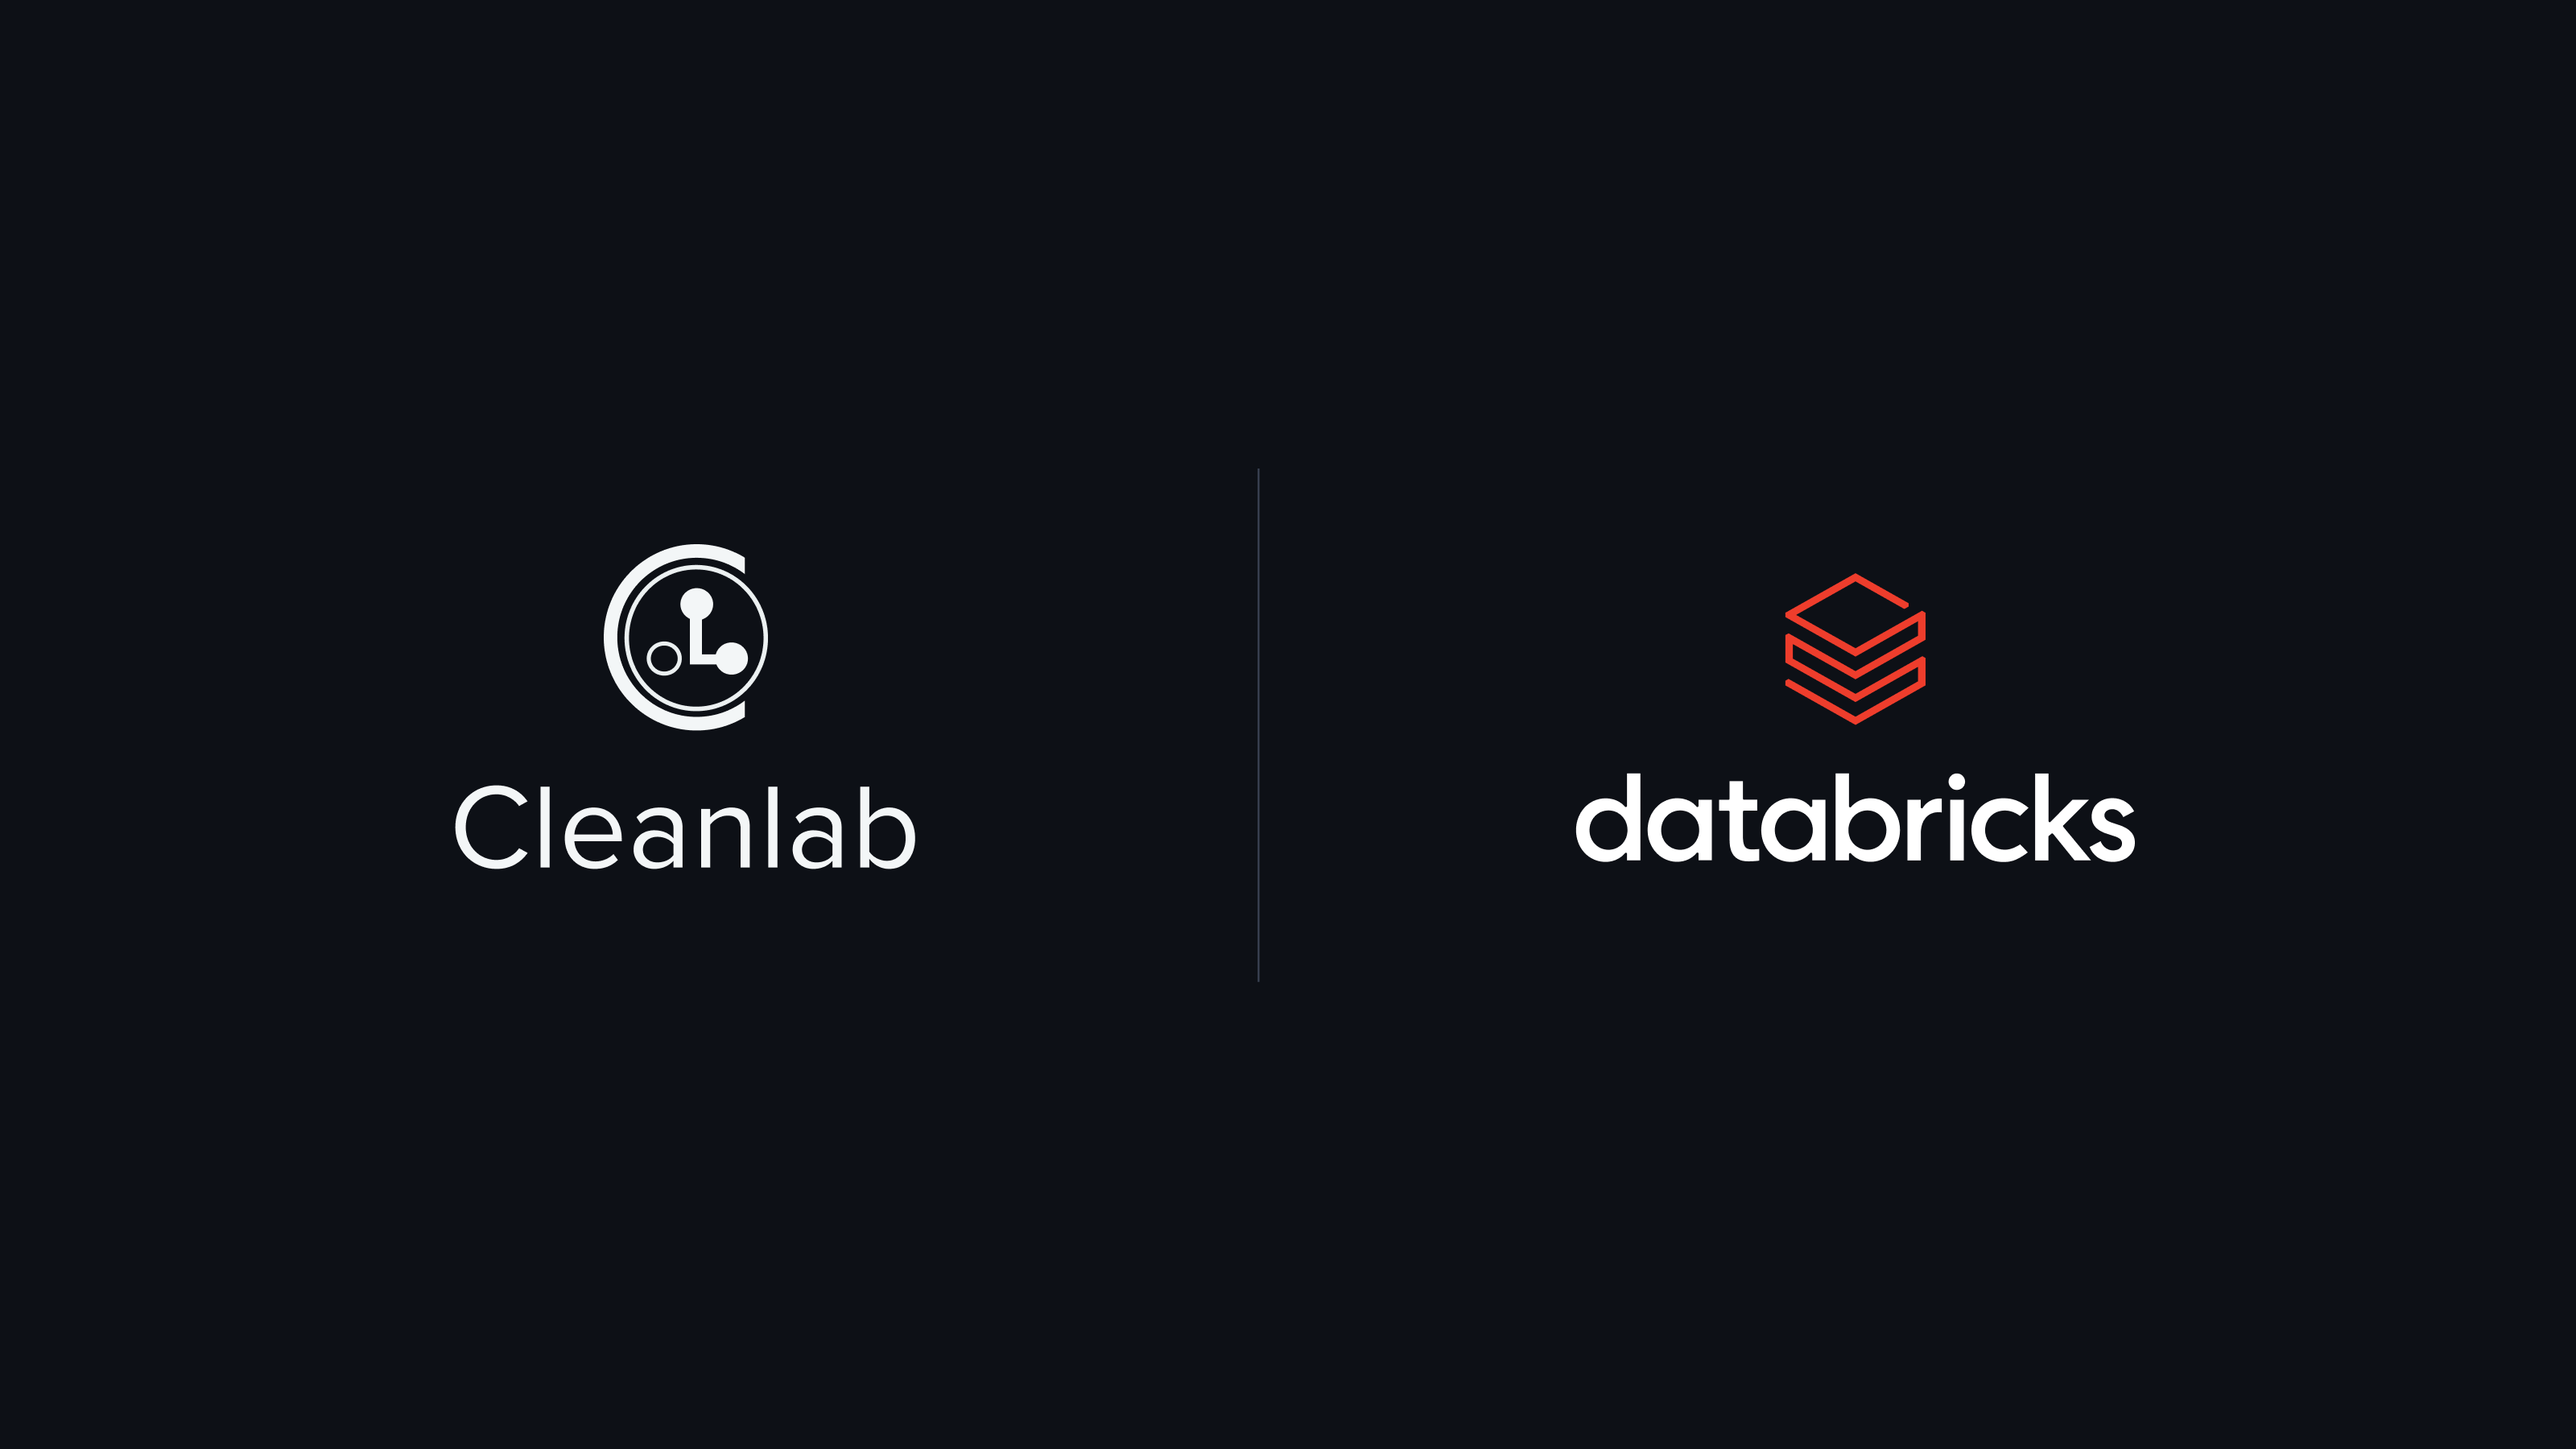 Using Cleanlab with Databricks